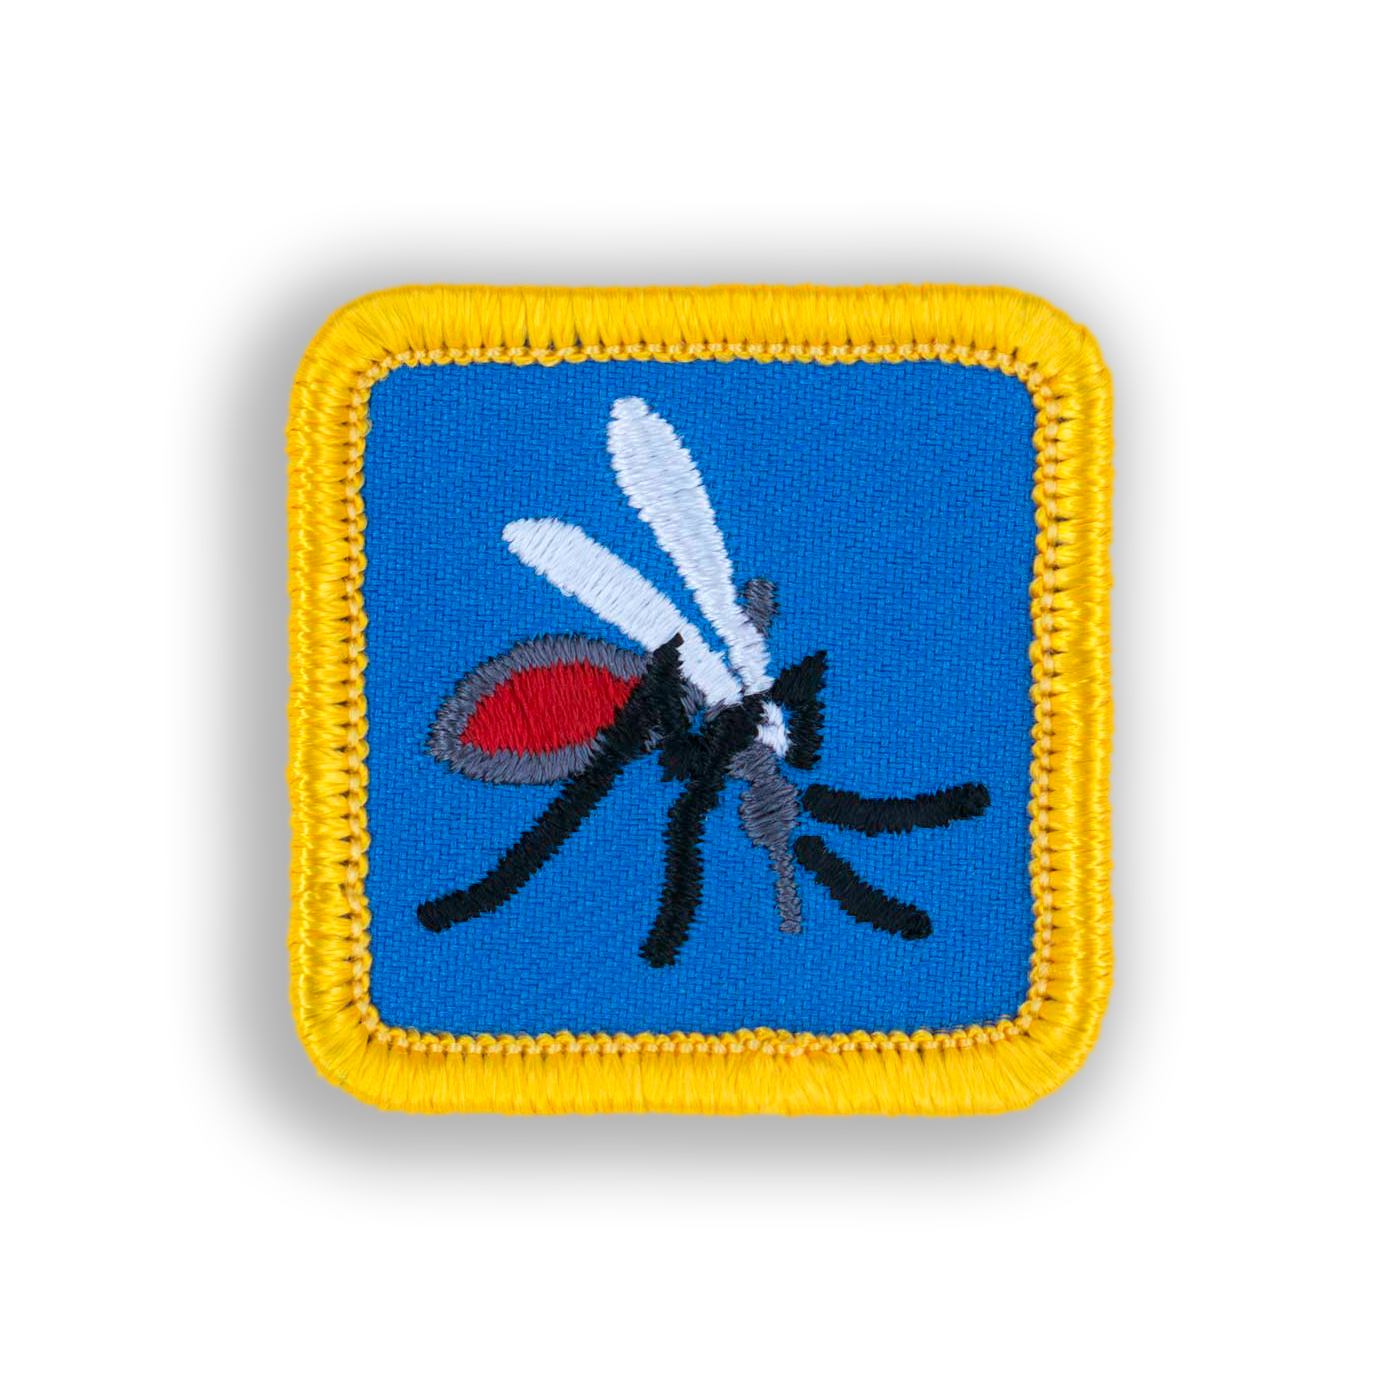 Mosquito Patch | Demerit Wear - Fake Merit Badges